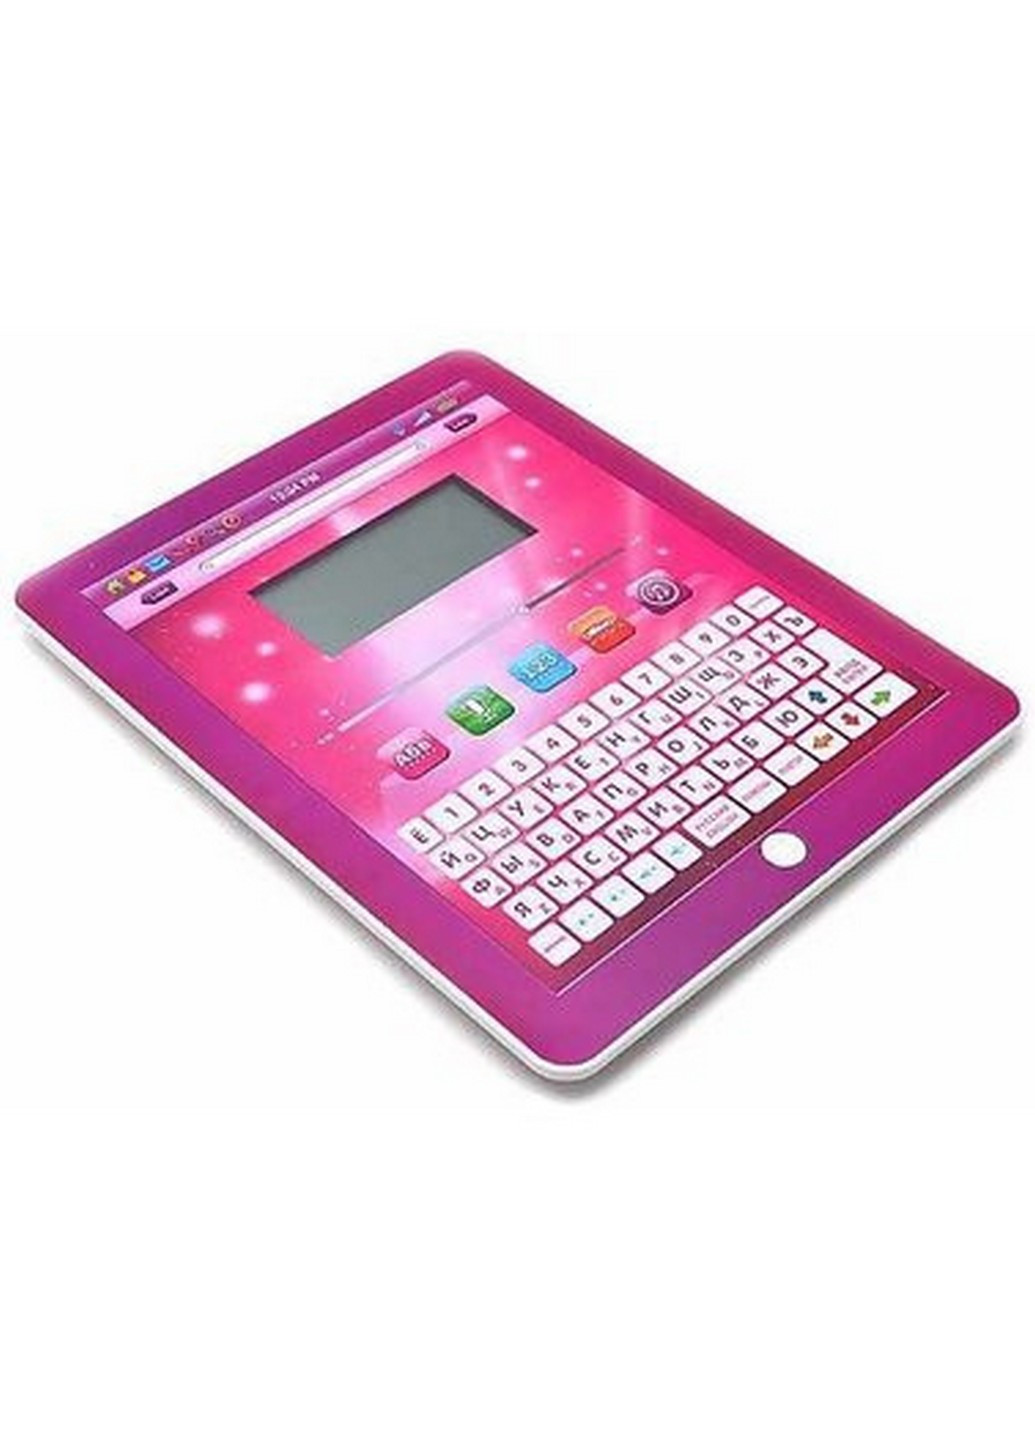 Дитячий планшет, 2 мови РУС/АНГЛ, літери, цифри, музика 27,5х25,5х3 см Play Smart (259265141)